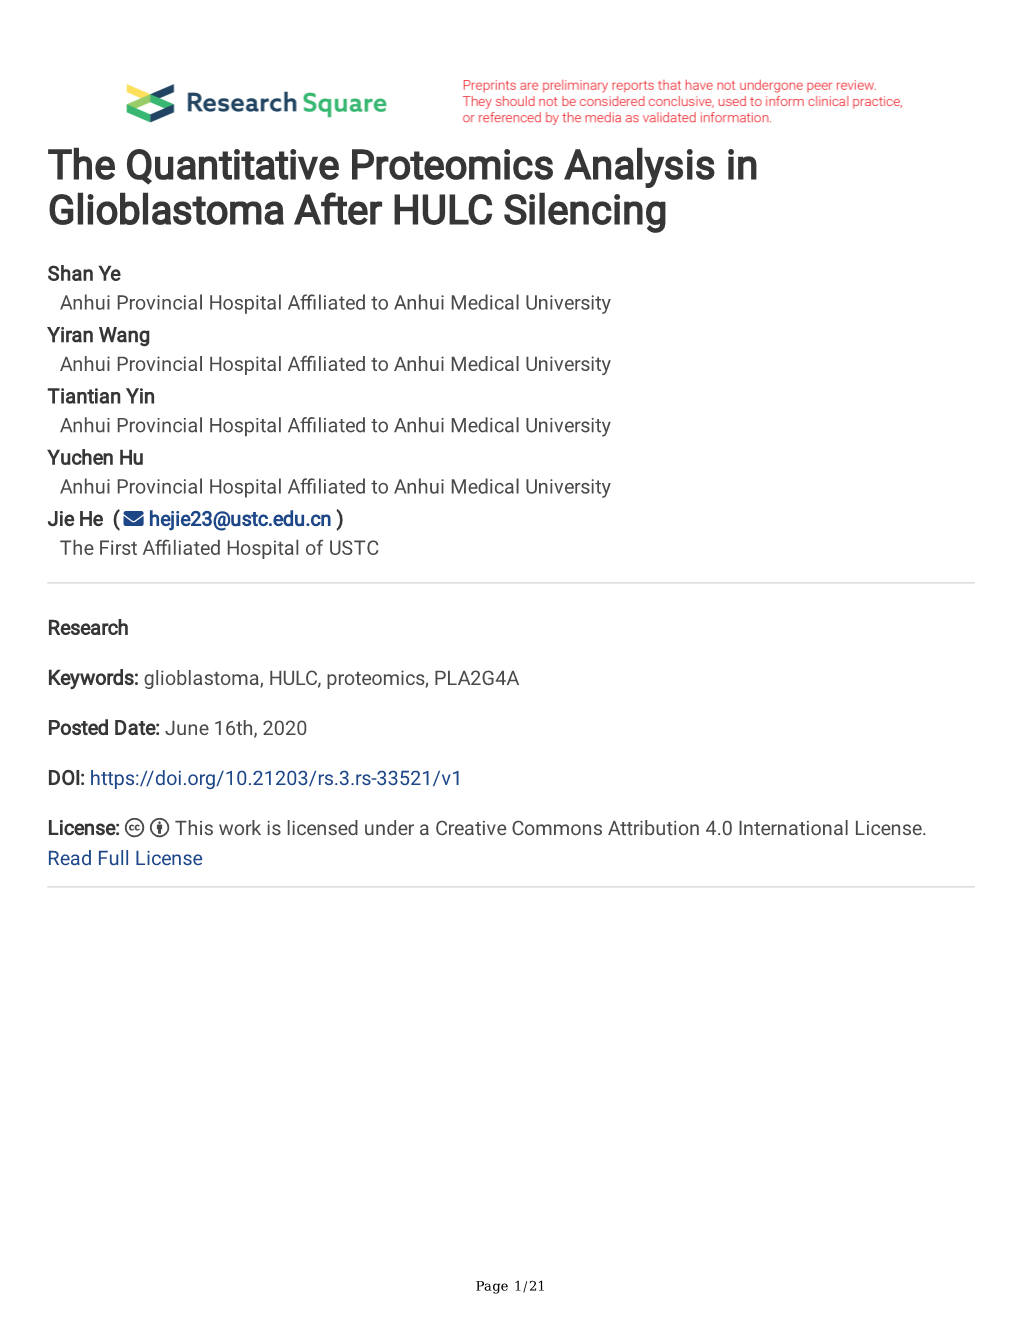 The Quantitative Proteomics Analysis in Glioblastoma After HULC Silencing